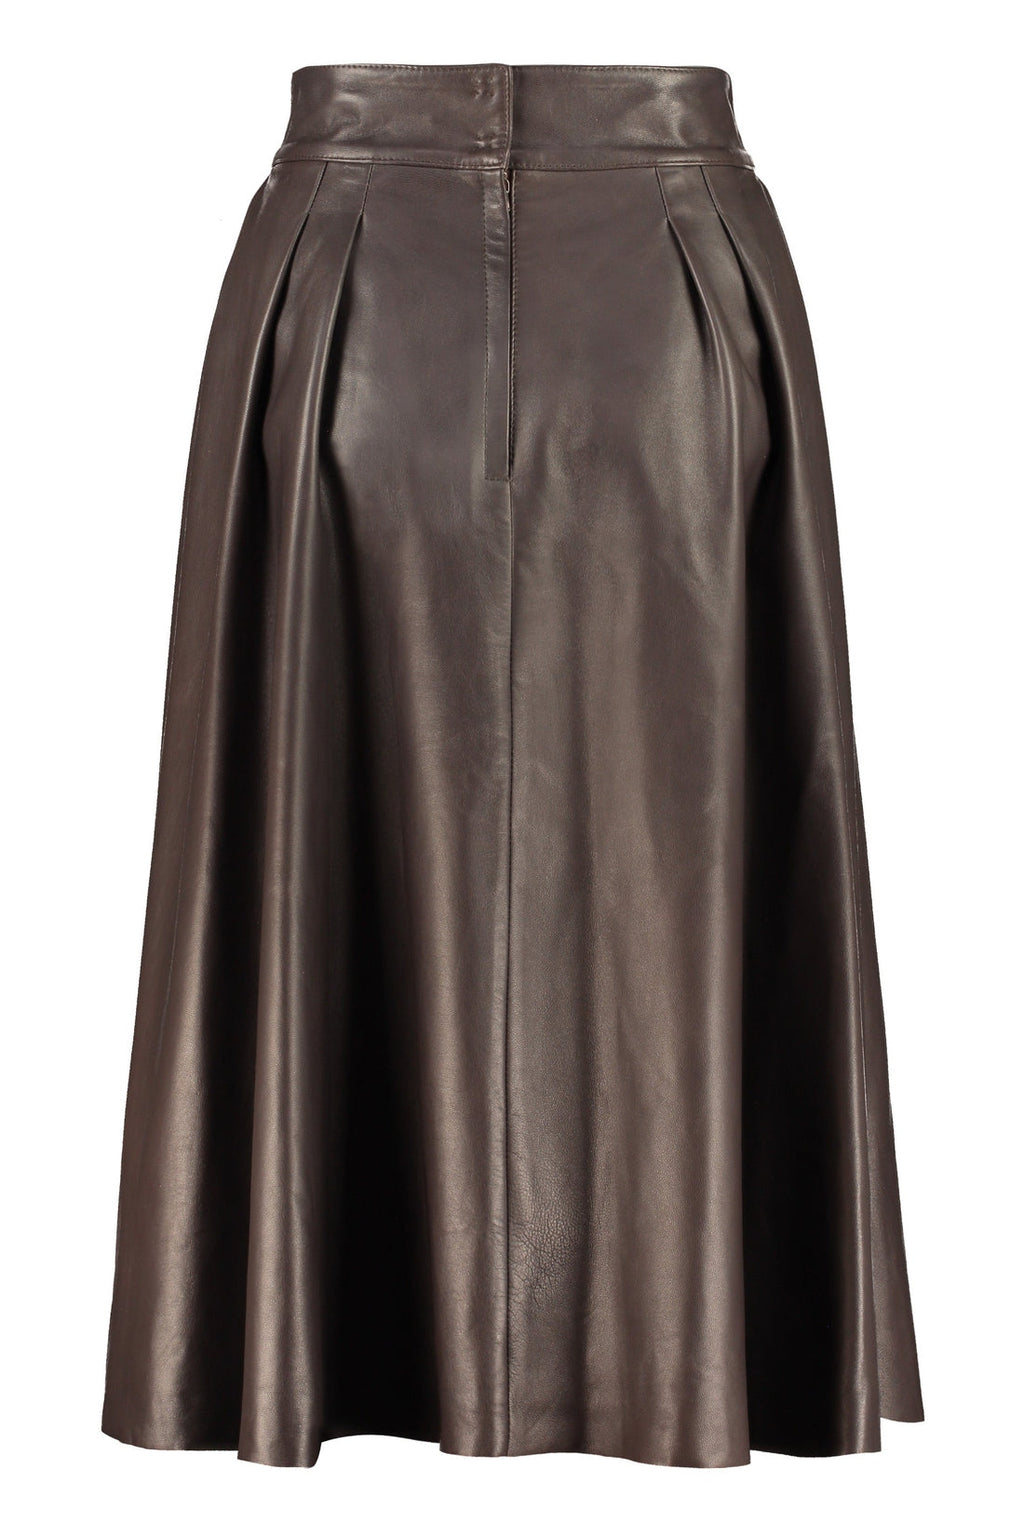 Dolce & Gabbana-OUTLET-SALE-Leather full skirt-ARCHIVIST